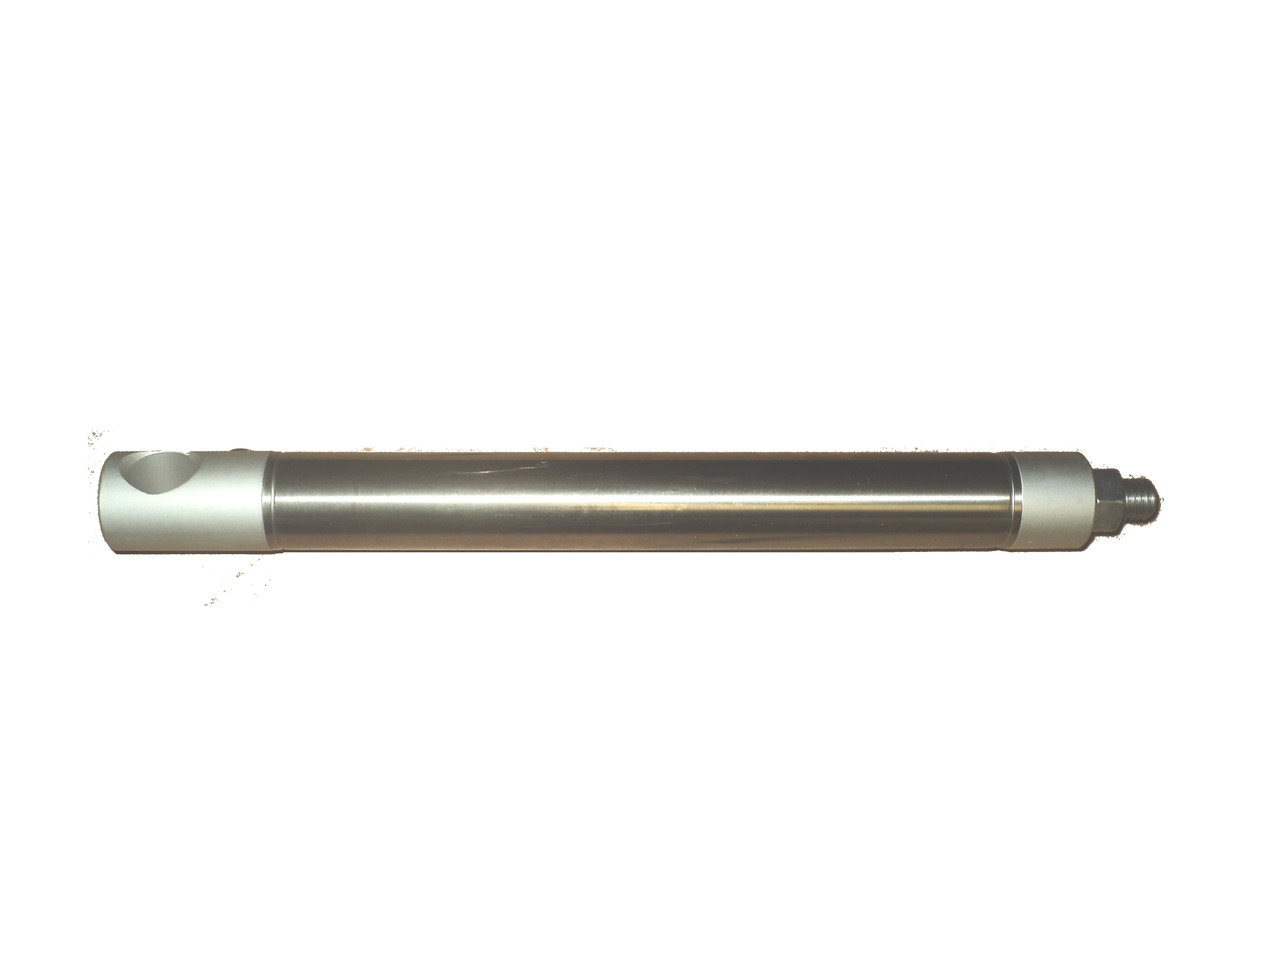 Bendpak Lift Parts. Lock release cylinder